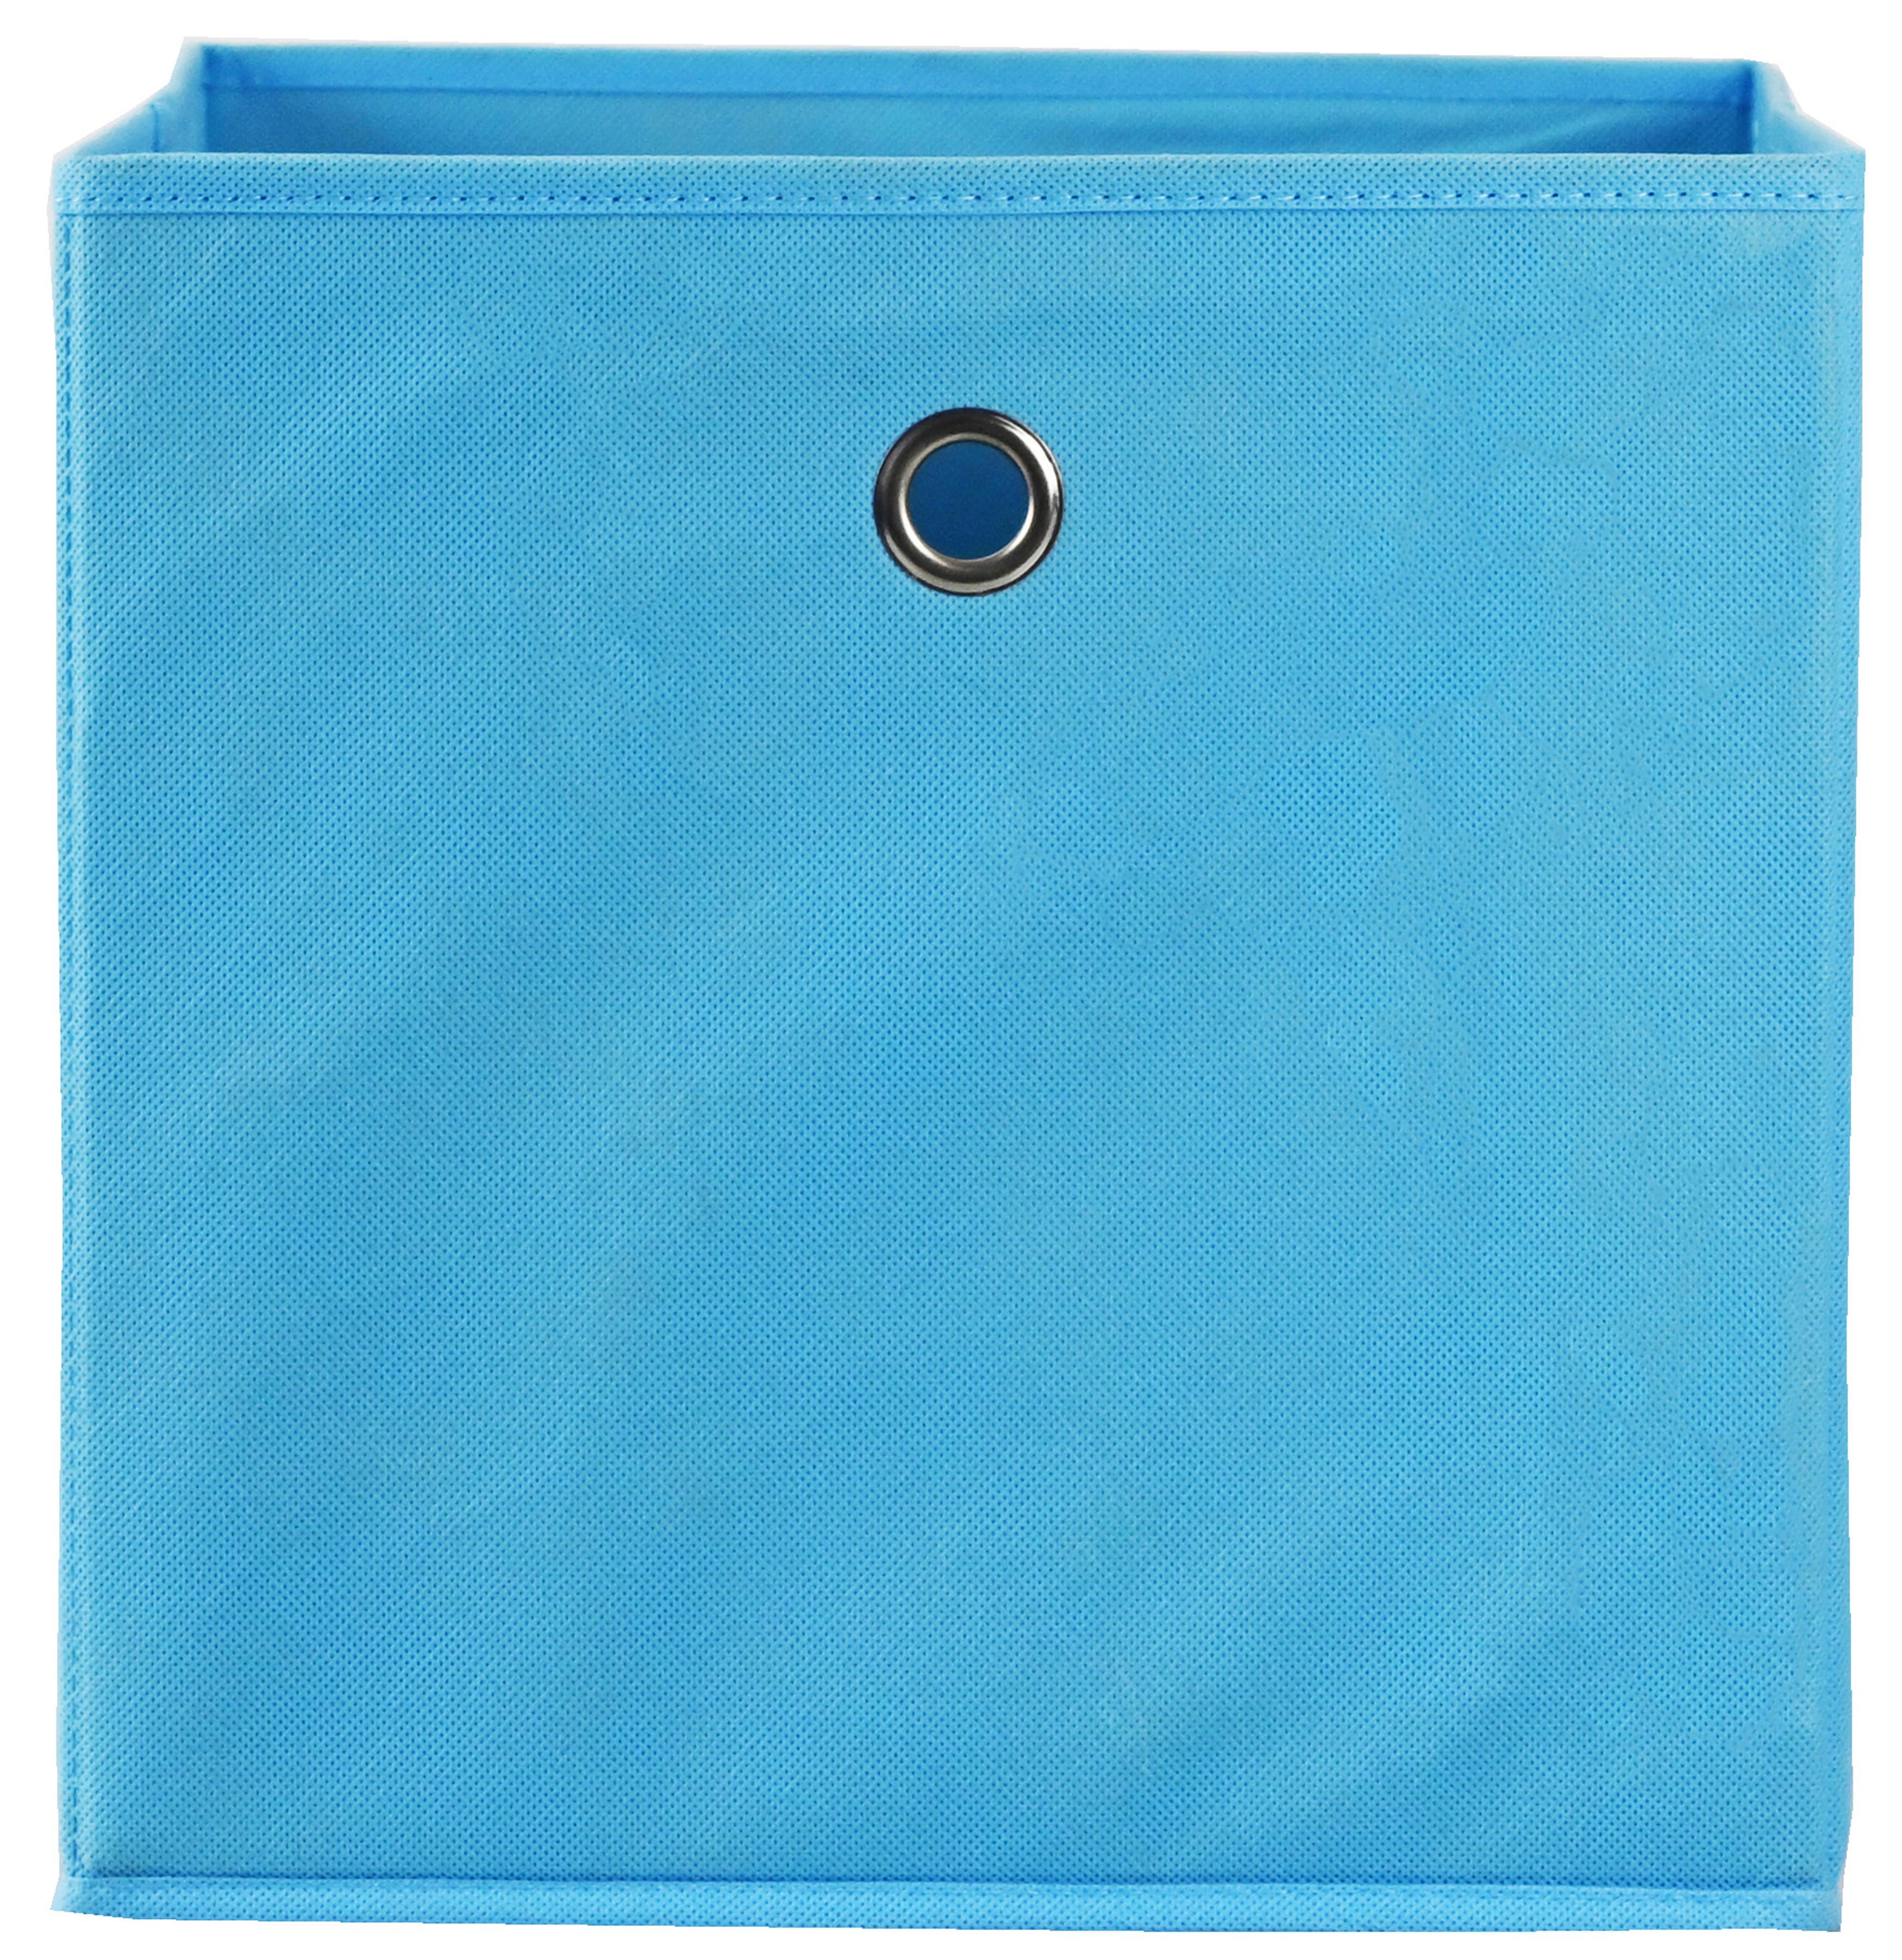 Faltbox Fibi in Blau - Hellblau, Konventionell, Karton/Textil (30/30/30cm) - Modern Living